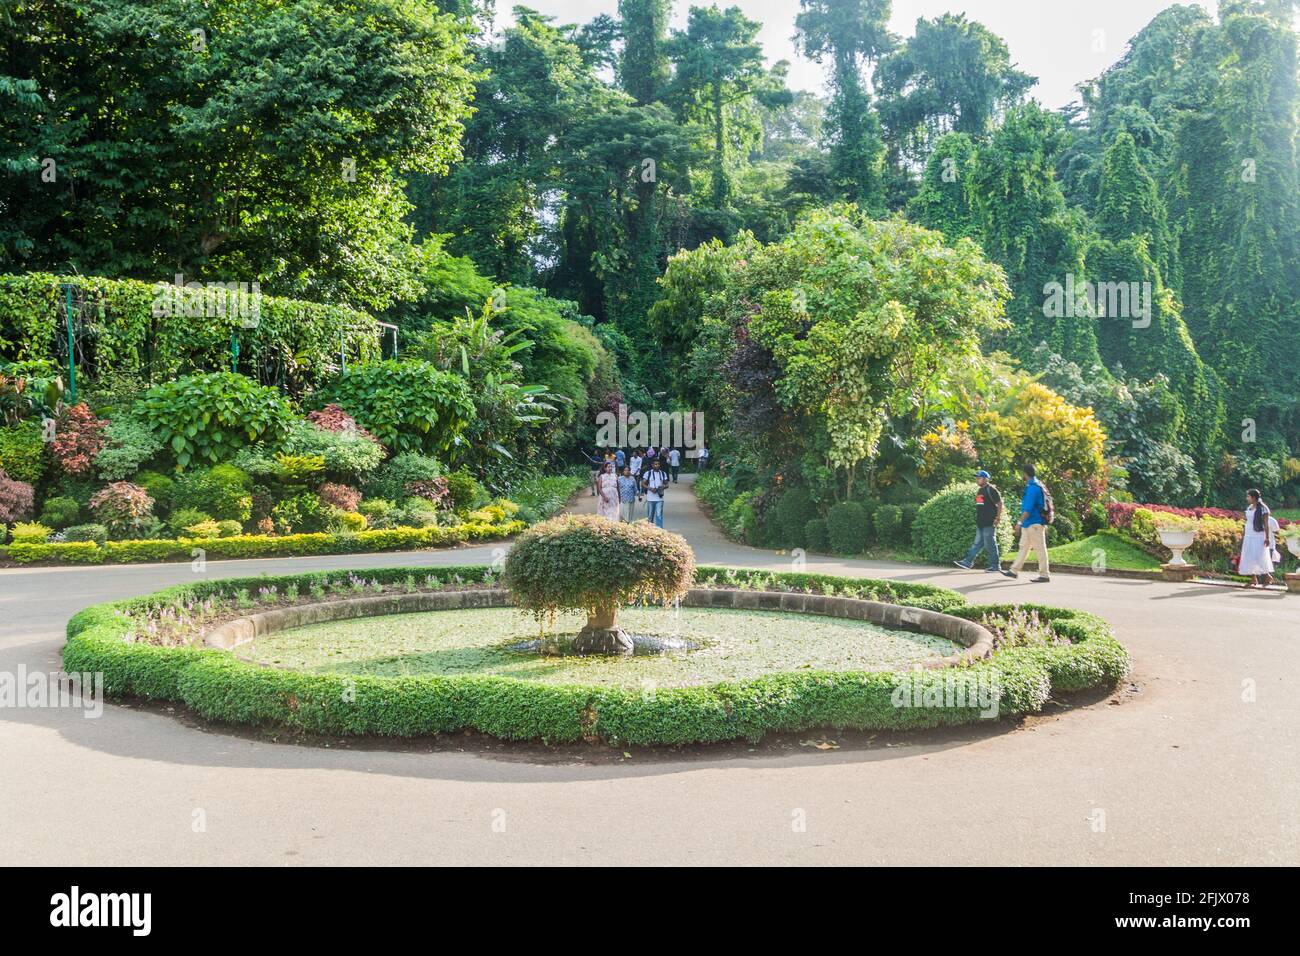 KANDY, SRI LANKA - 18 JUILLET 2016 : les gens visitent les magnifiques jardins botaniques royaux de Peradeniya près de Kandy, Sri Lanka Banque D'Images